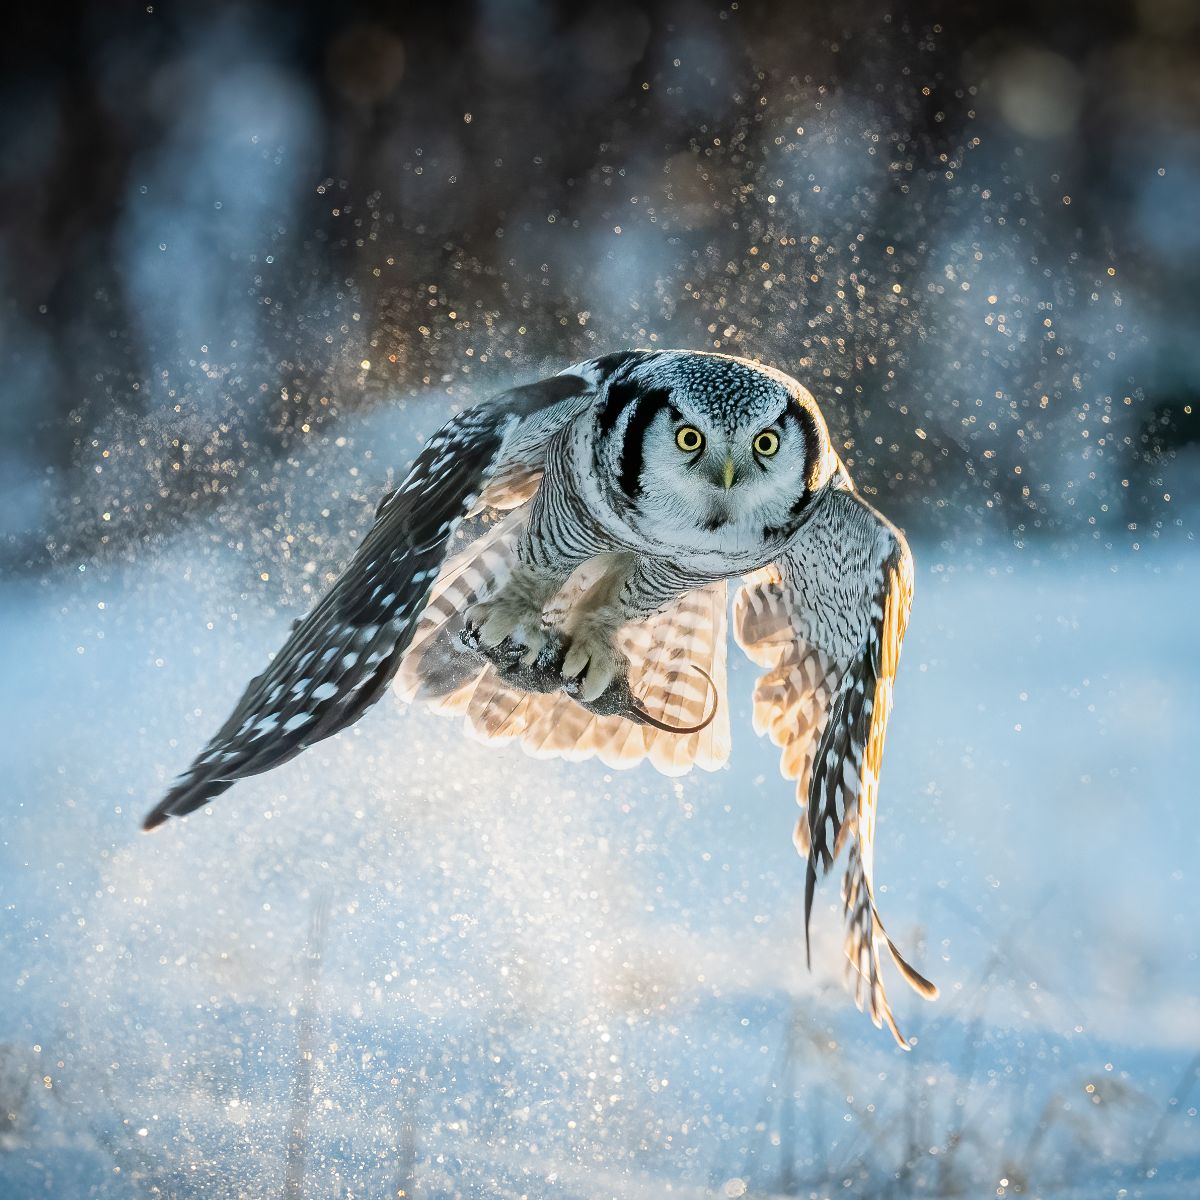 Hearing An Owl Hoot 3 Times Spiritual Meaning